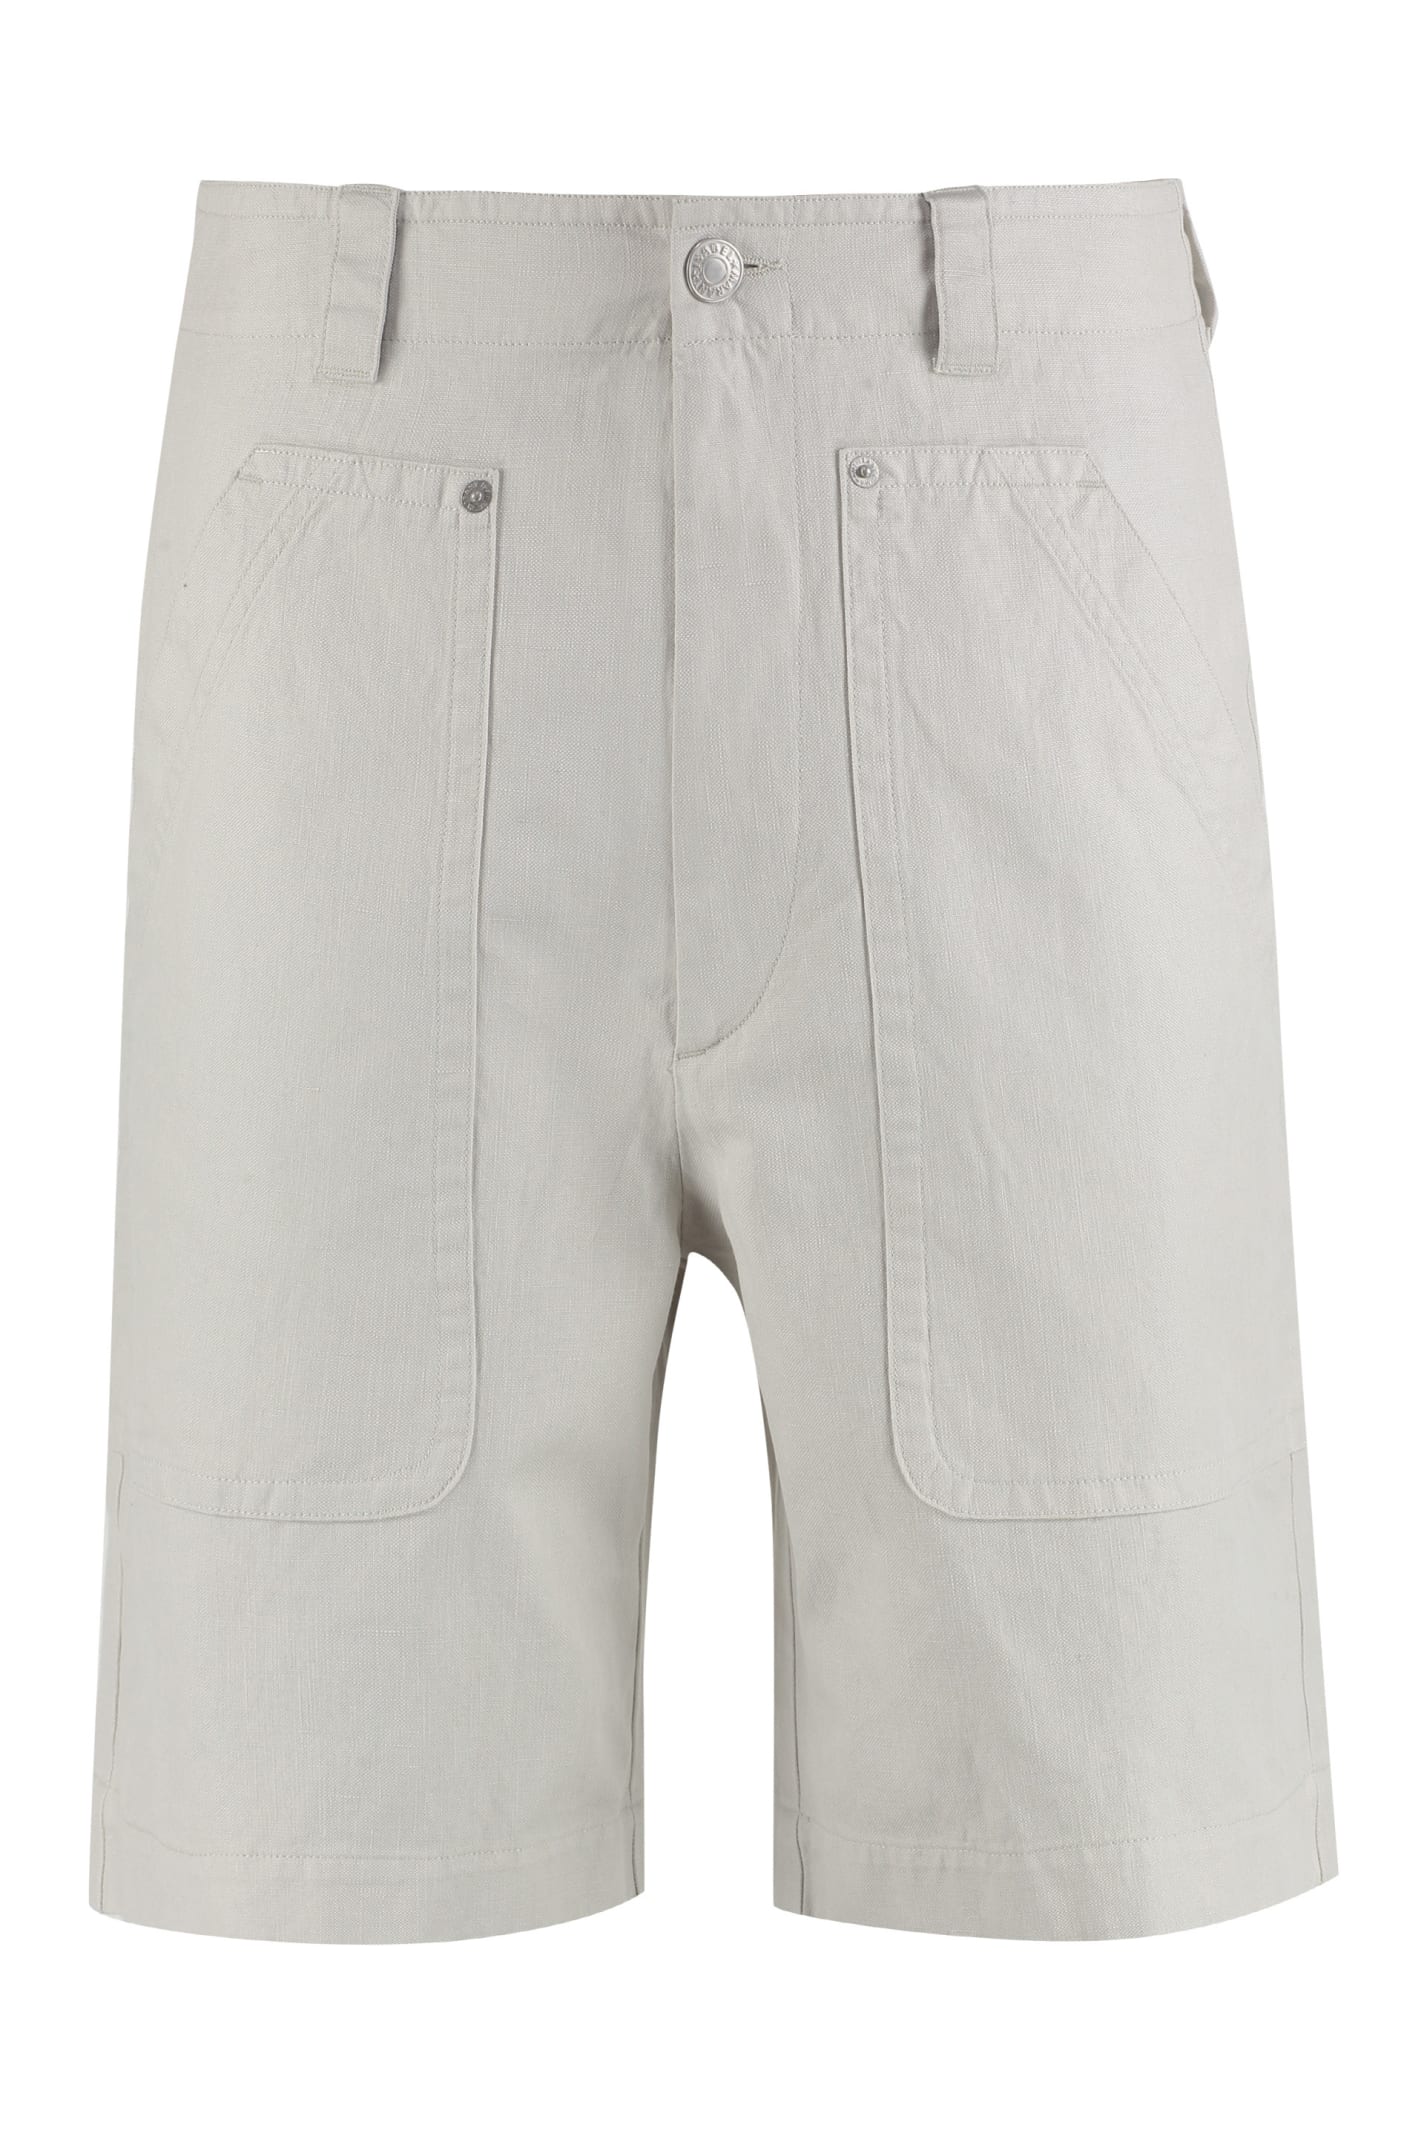 Isabel Marant Kilano Cotton And Linen Bermuda-shorts